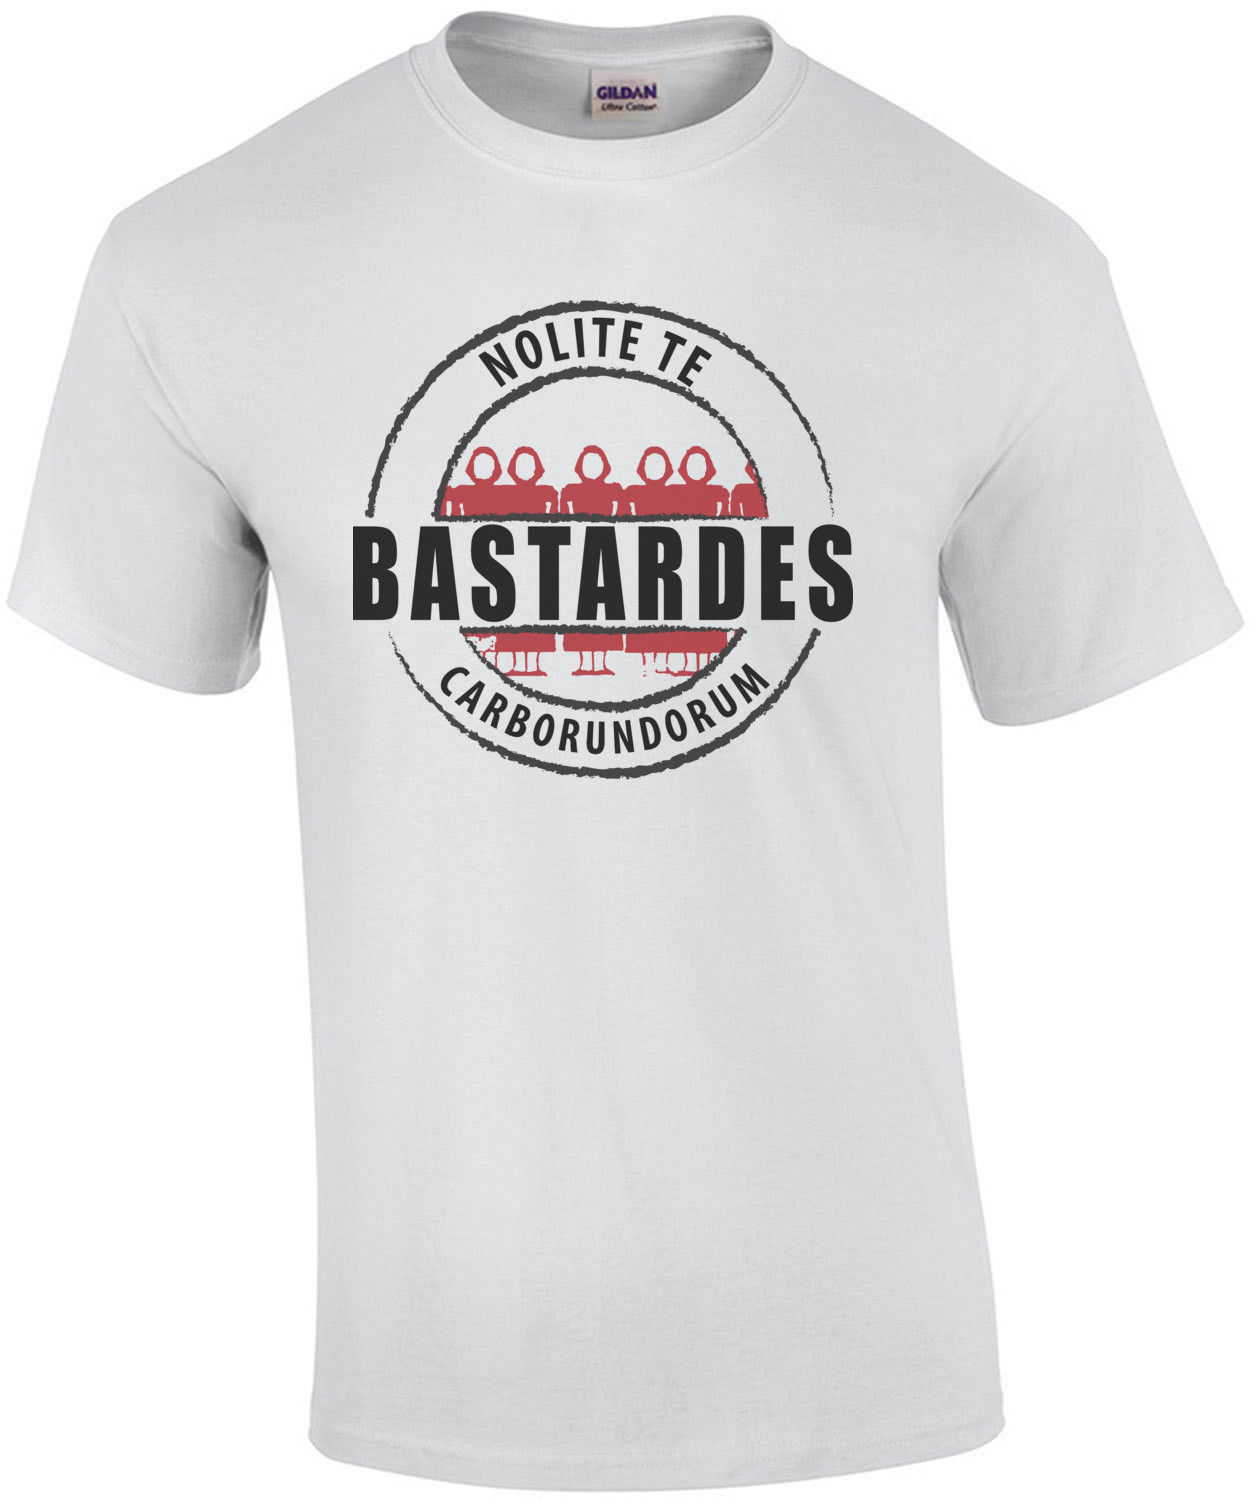 Nolite Te Bastardes Carborundorum - The Handmaid's Tale T-Shirt